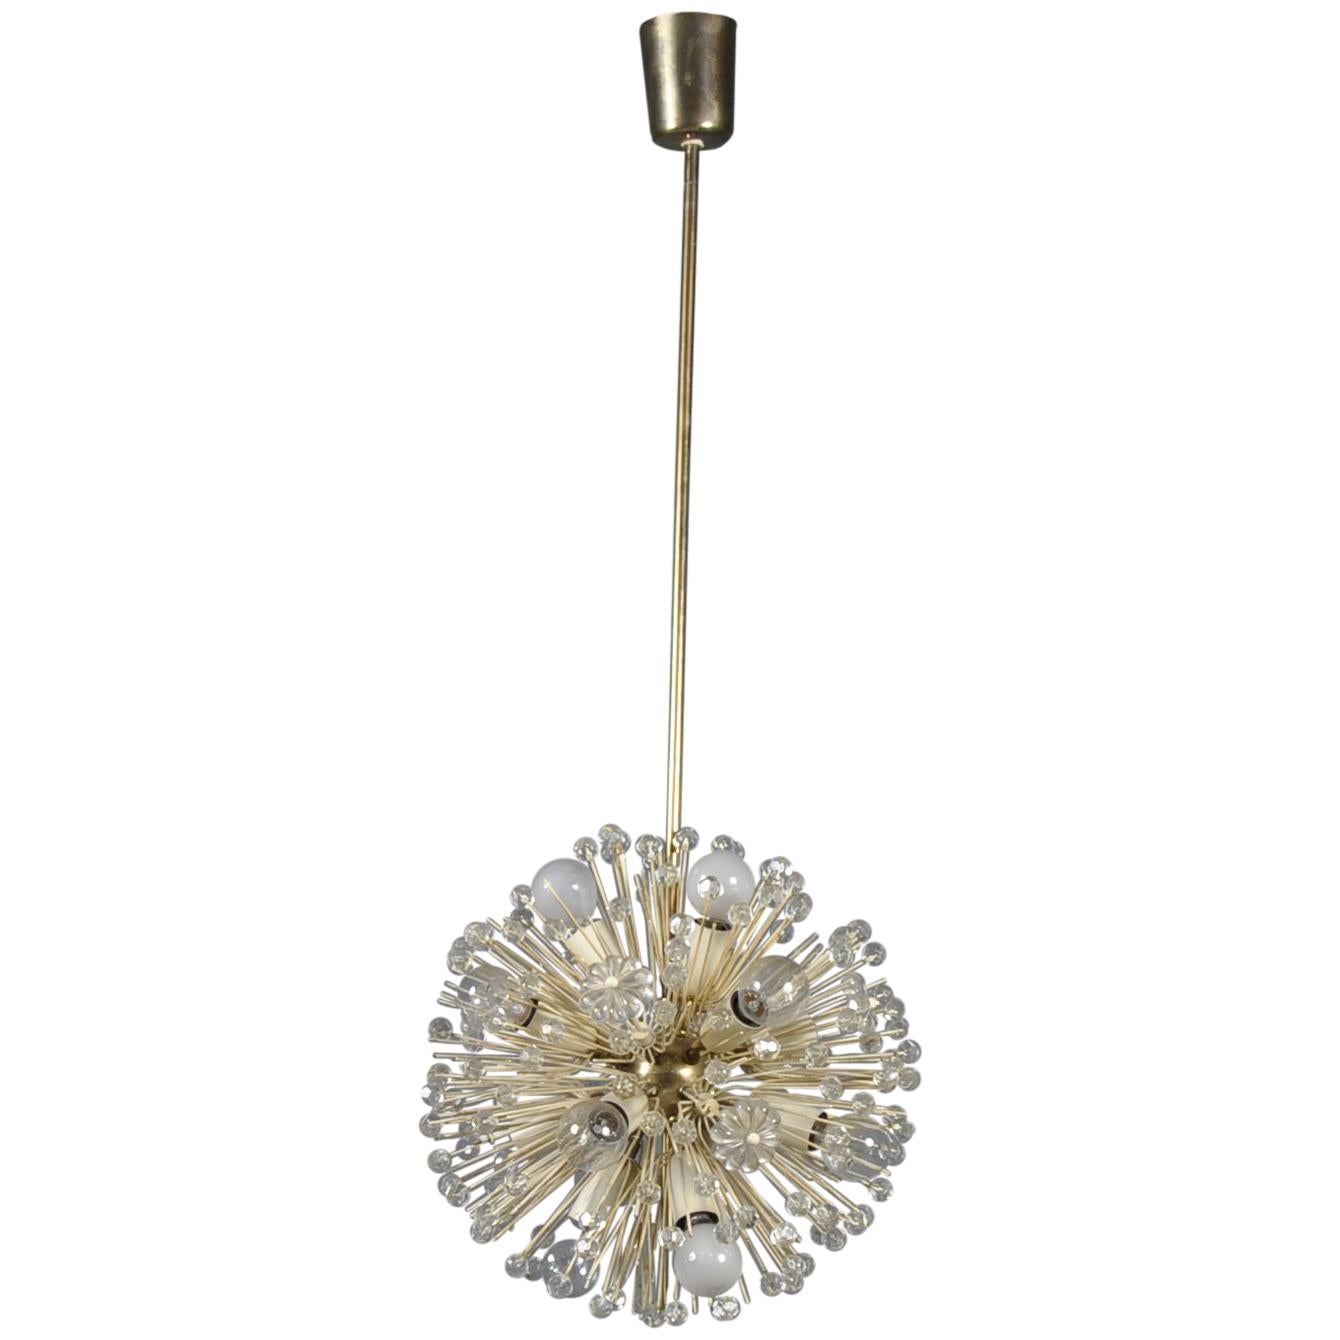 Brass Dandelion Ceiling Lamp by Emil Stejnar for Rupert Nikoll, Austria, 1950s For Sale